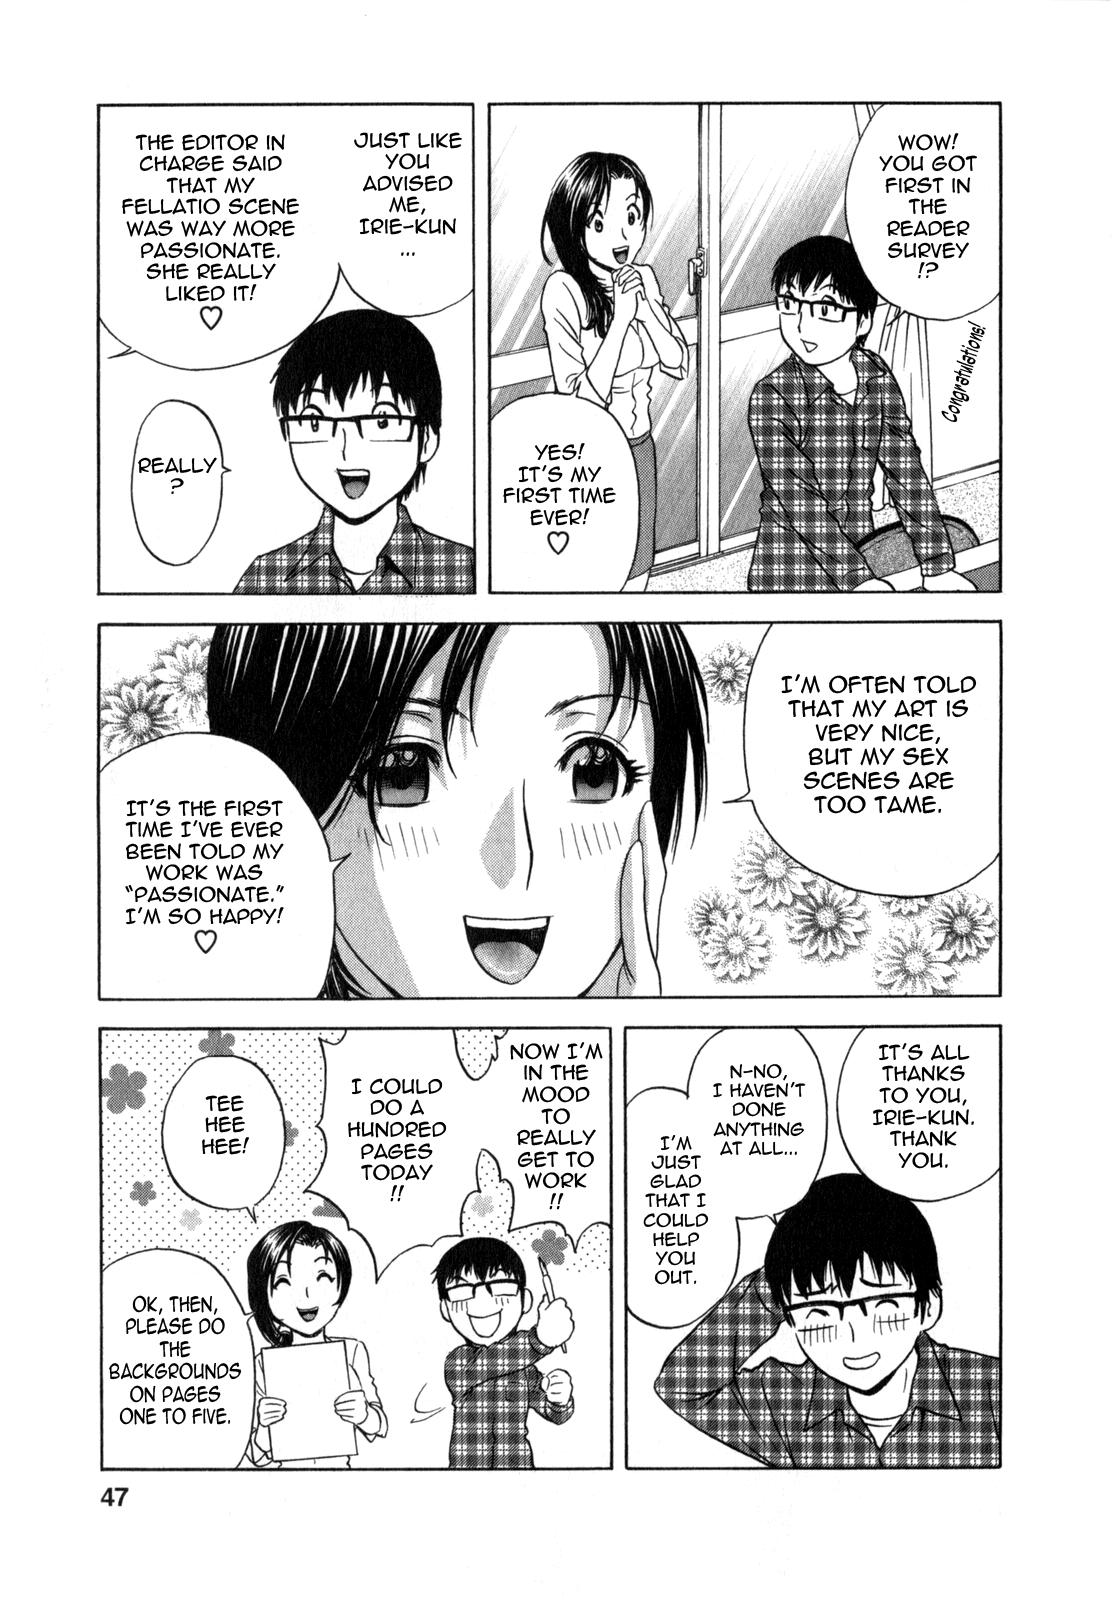 [Hidemaru] Life with Married Women Just Like a Manga 1 - Ch. 1-9 [English] {Tadanohito} 49